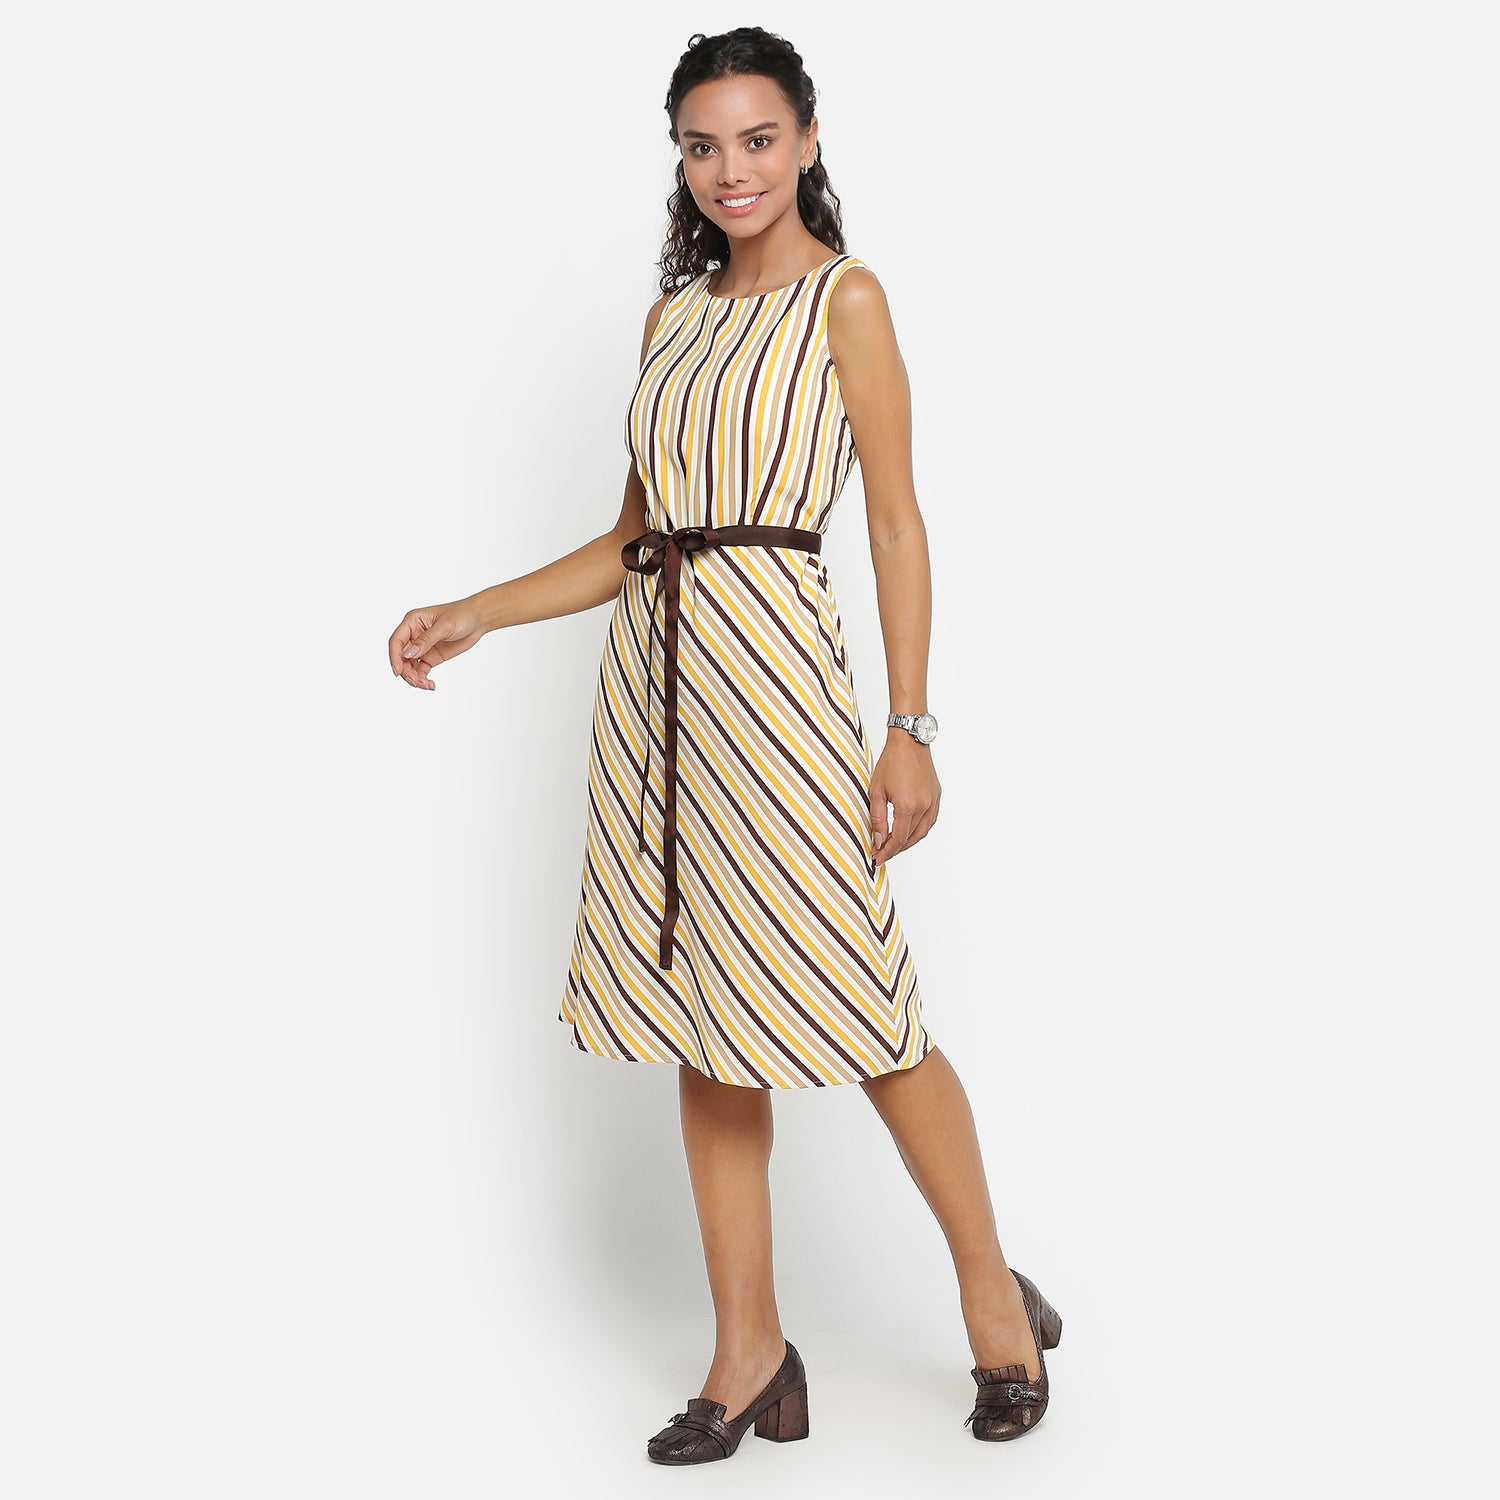 Yellow Stripe Sleeveless Dress With Brown Belt